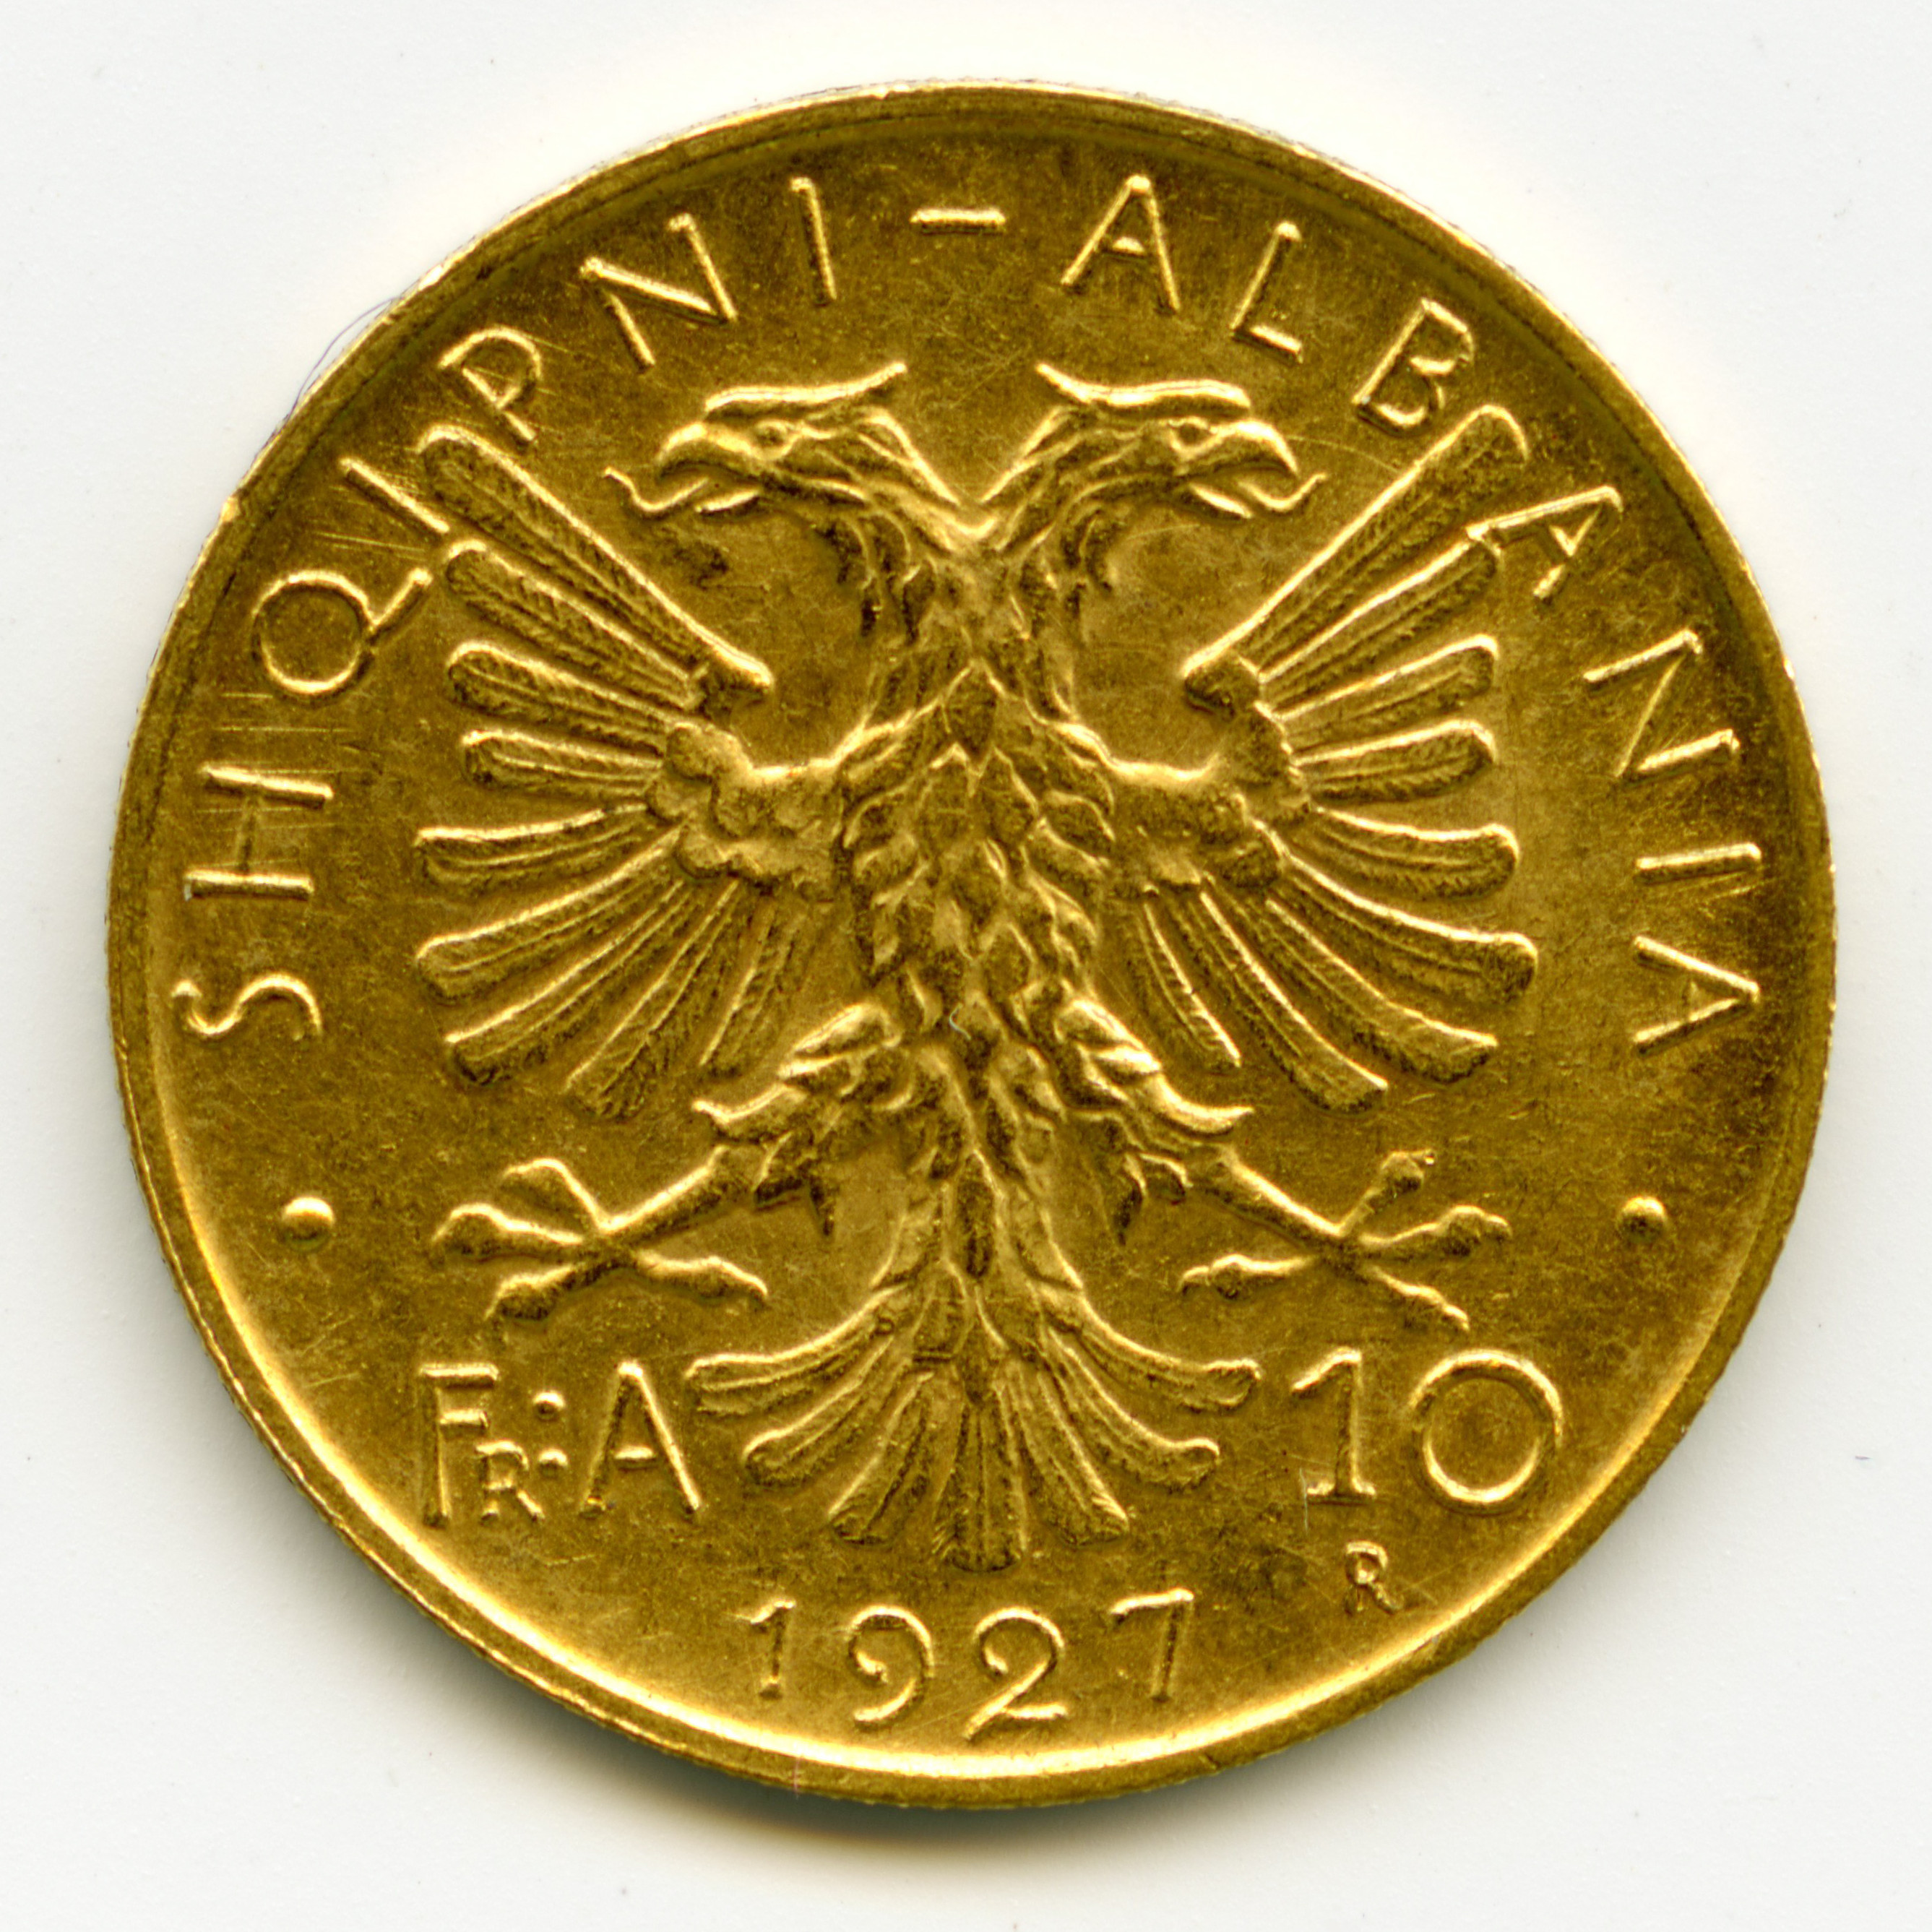 Albanie - 10 Franga Ari - 1927 R revers